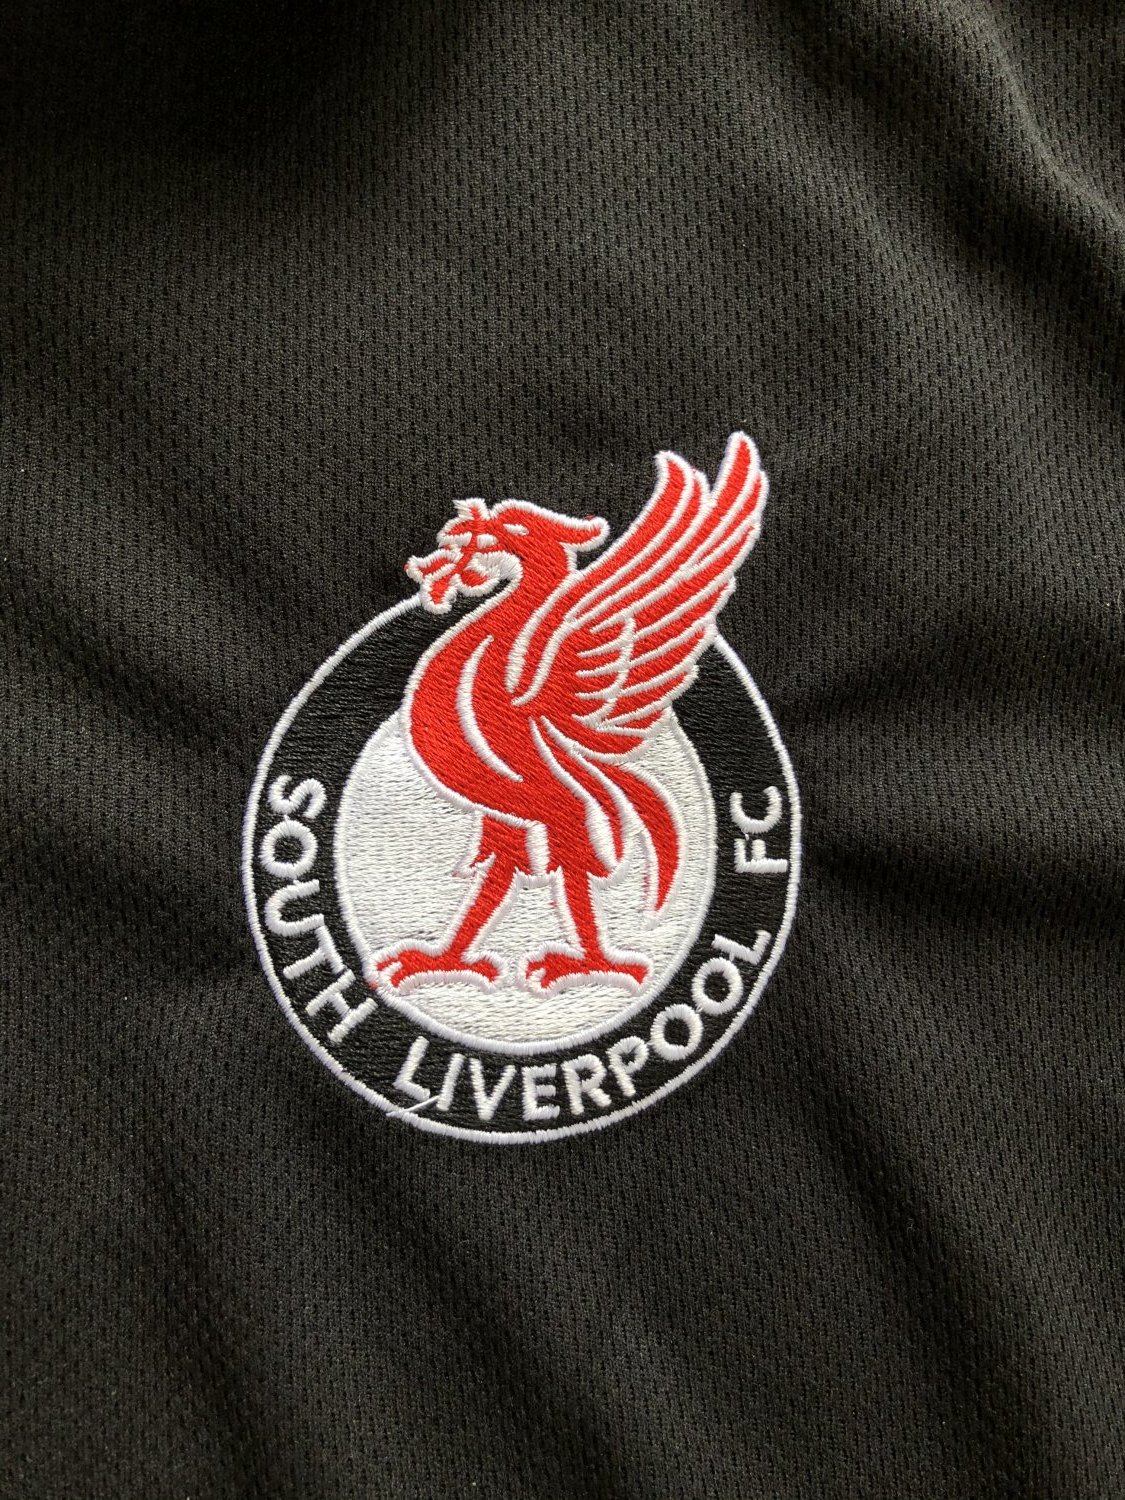 South Liverpool FC Training/Leisure football shirt 2019 - 2020.